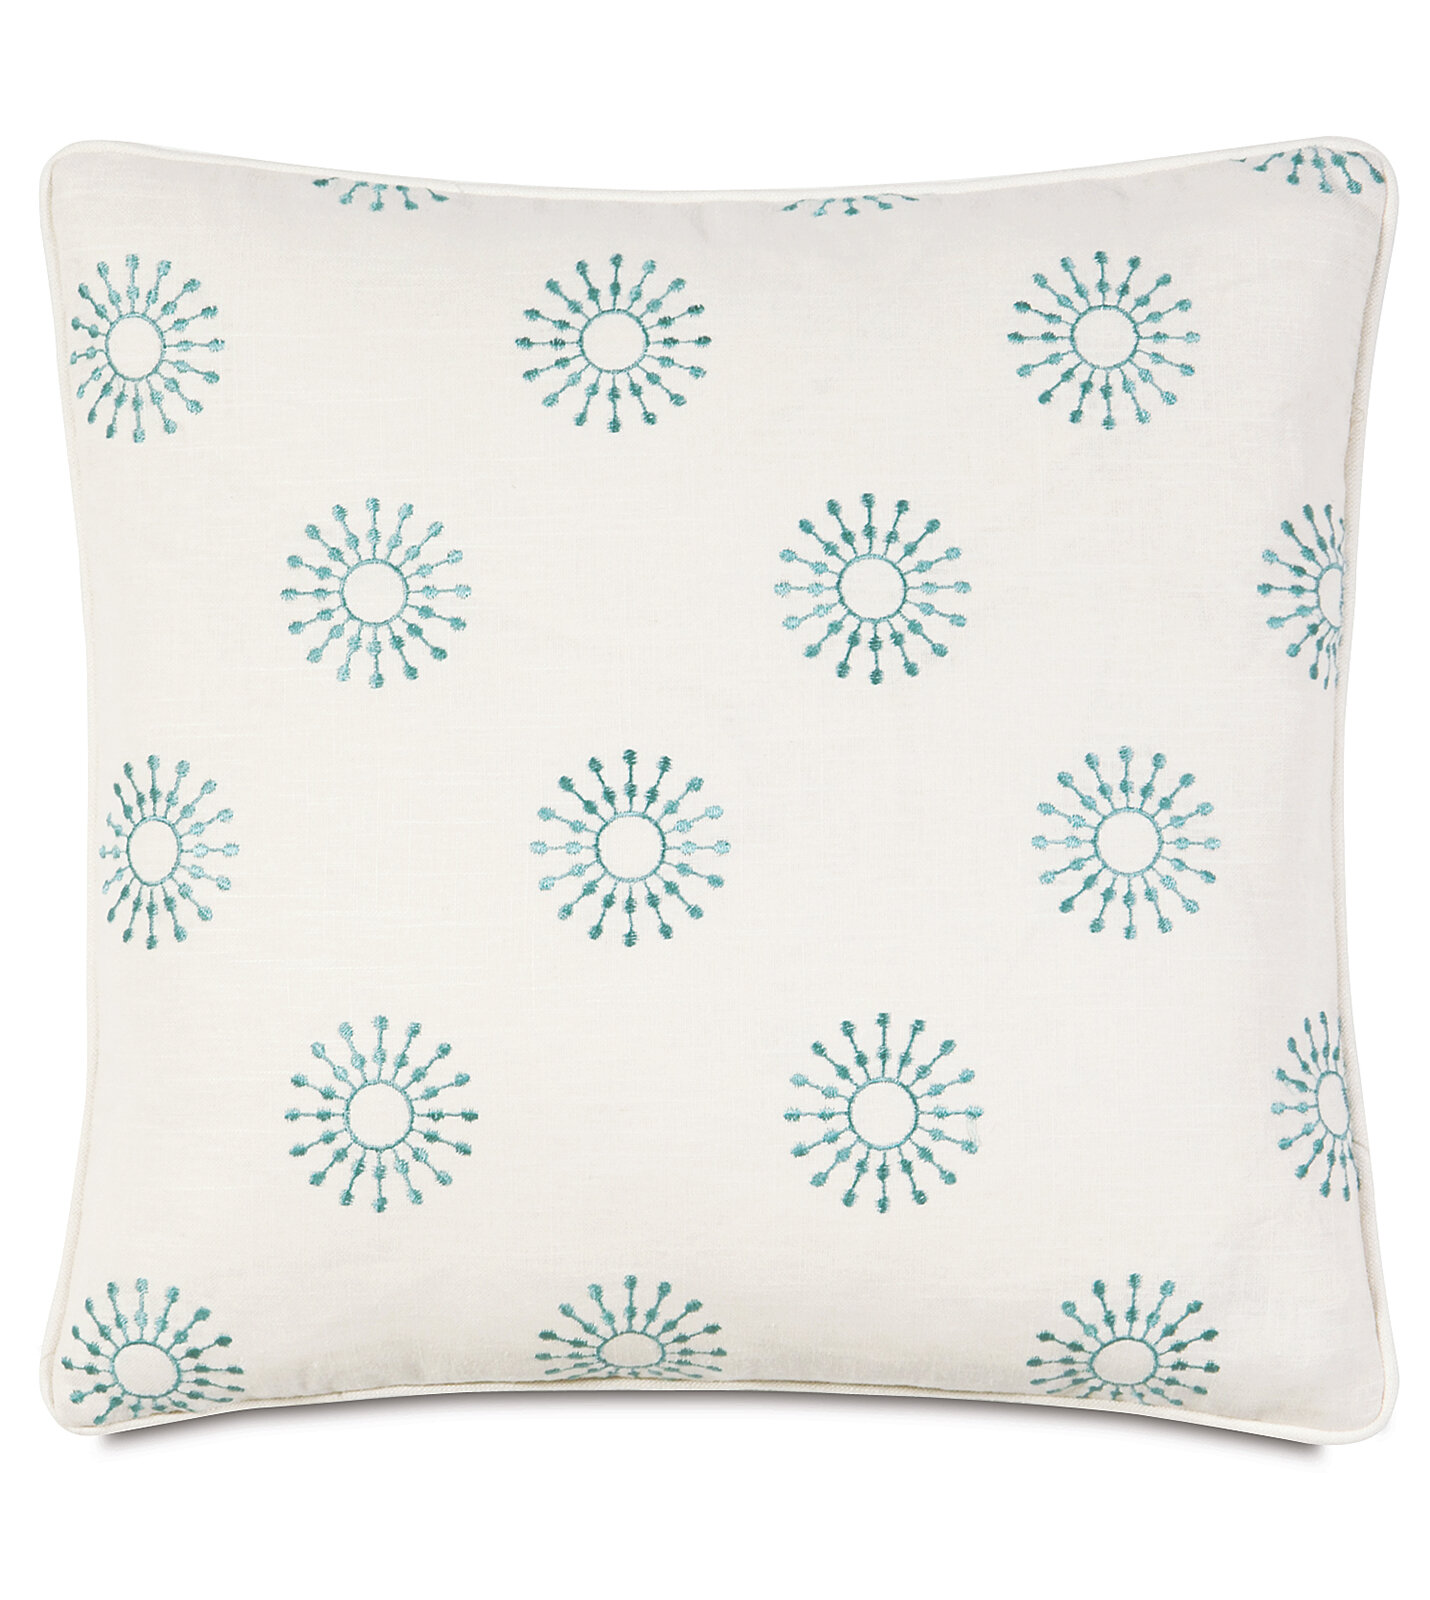 Eastern Accents Trofie Decorative Pillow, 22 Square